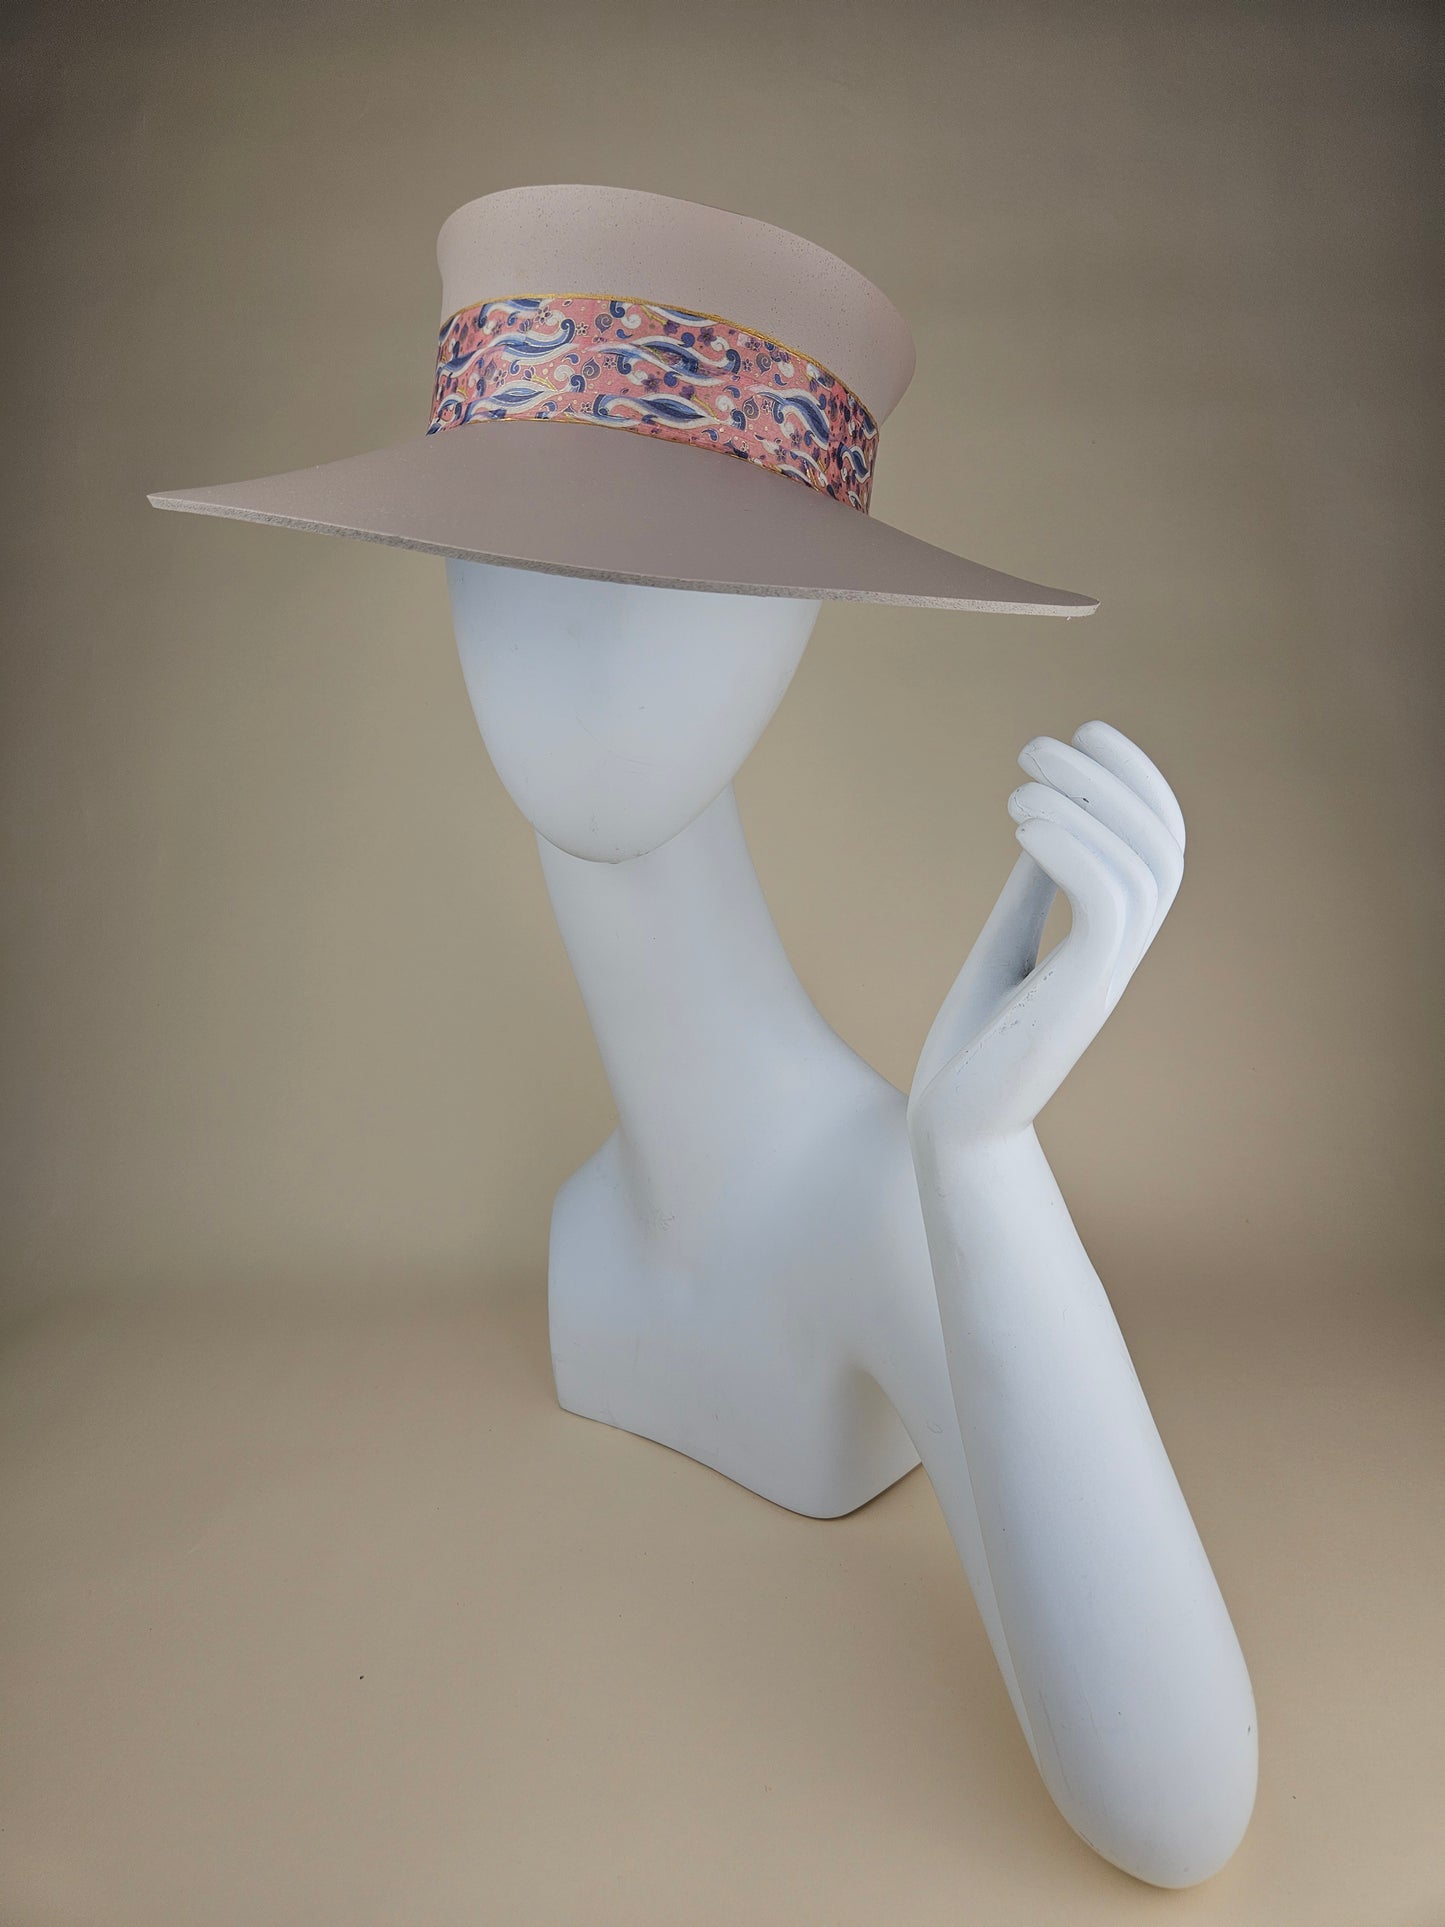 Tall Peach Gray Audrey Sun Visor Hat with Whimsical Pink and Lavender Blue Floral Band: Tea, Walks, Brunch, Fancy, Golf, Summer, Church, No Headache, Beach